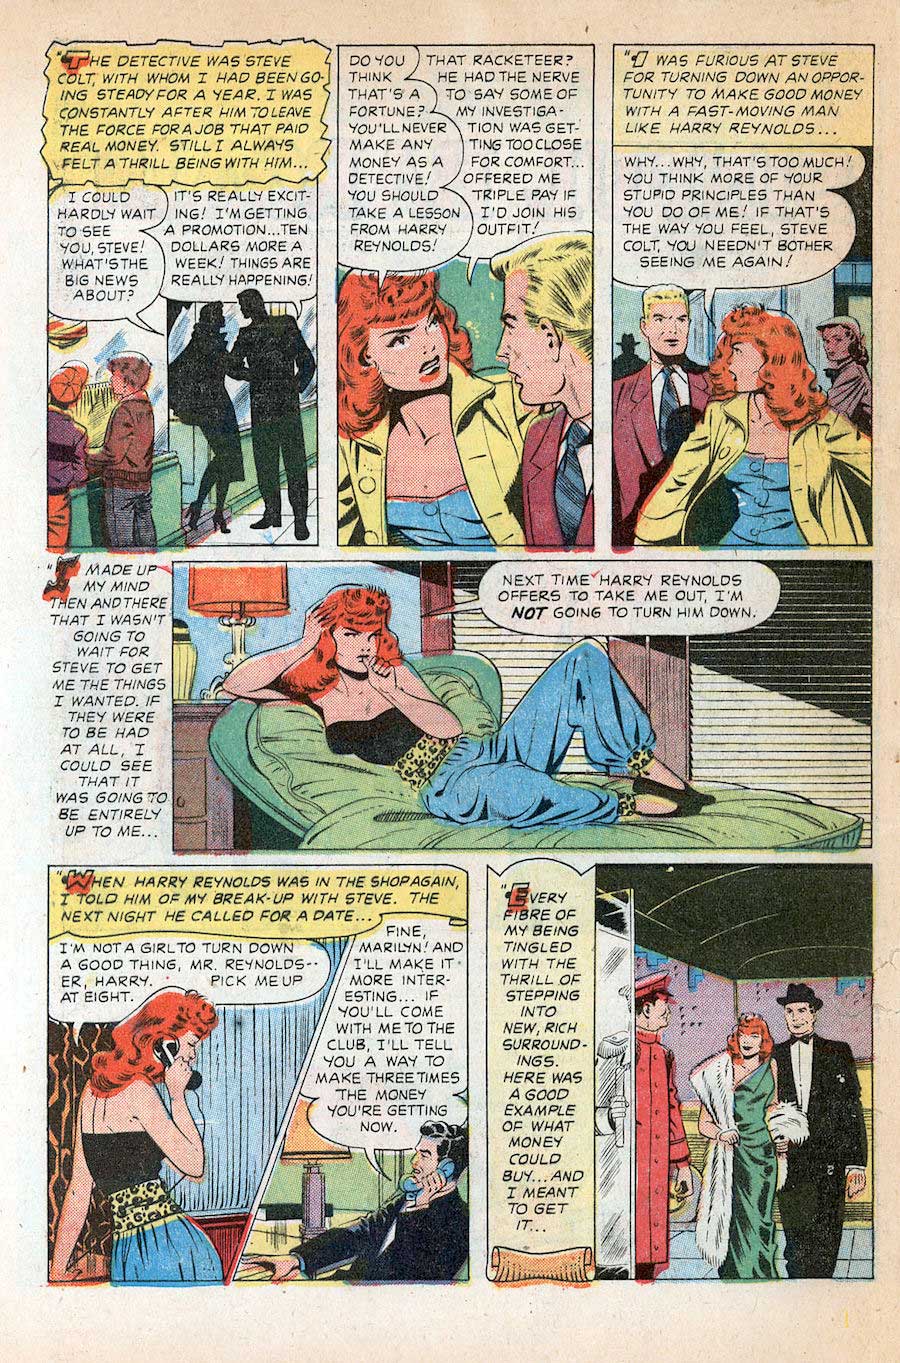 Pictorial Romances #8 st. john golden age 1950s romance comic book page art by Matt Baker